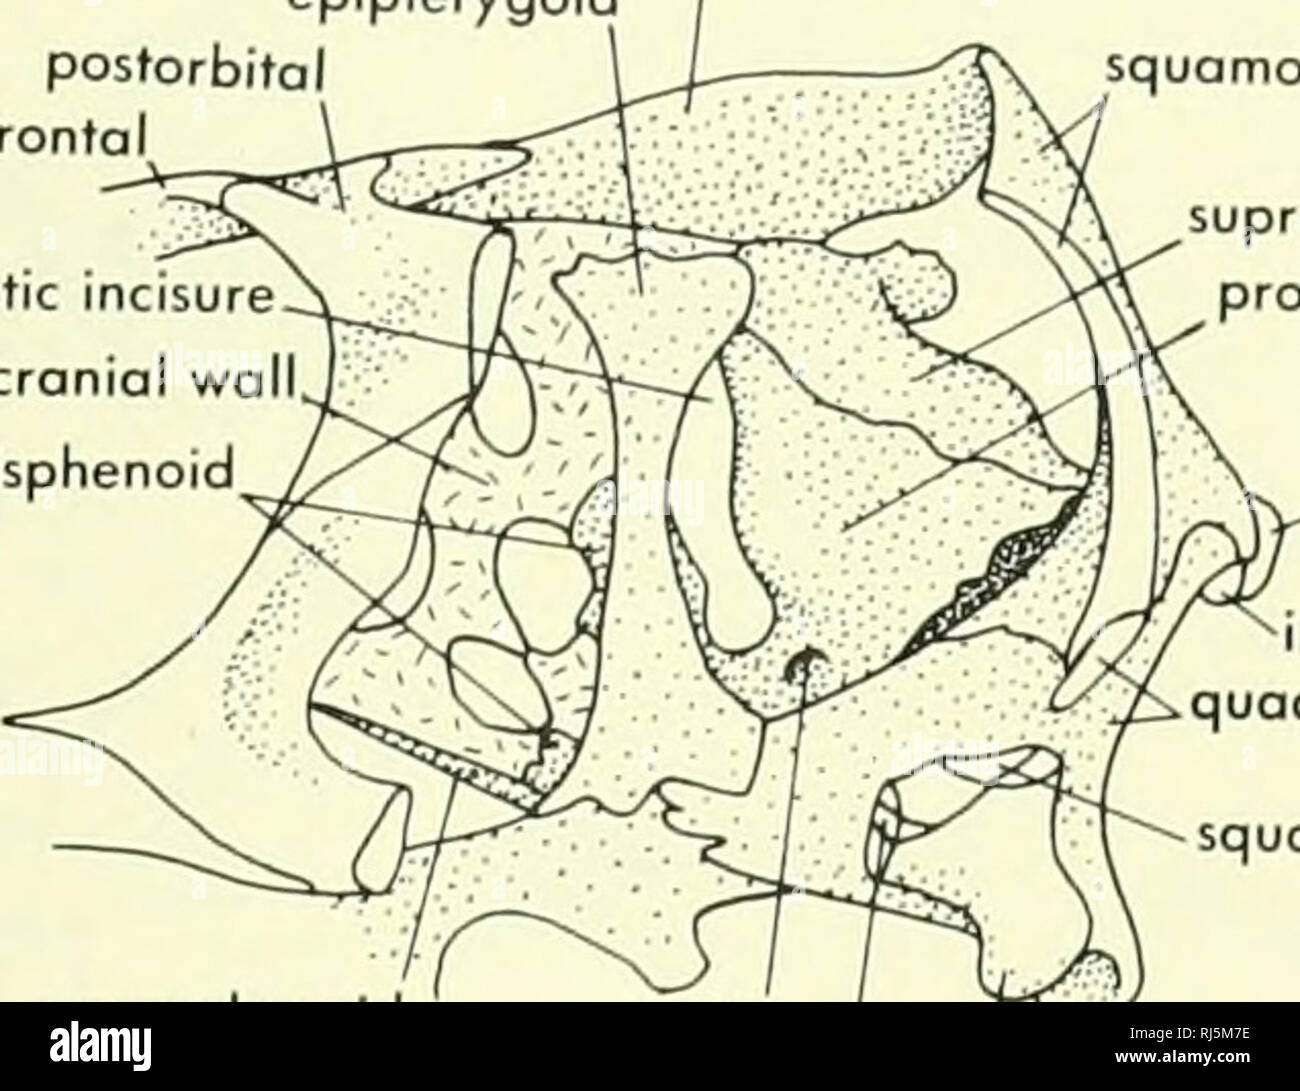 . Chordate morphology. Morphology (Animals); Chordata. exoccipital process' occipital condyle basipterygoid process' squamosal posttemporol fenestra jugal paroccipitol process of opisthotic quadrate quadrotojugaj (fused to quadrate) cranioquadrate fissure fenestra vestibuli IX-X-XI epipterygoid postorbital postfrontal P°'''«*°' parietal foramen squamosal epipterygoid parietal prootic incisure membranous cranial wo basisphenoid B. parasphenoid supraoccipitol prootic prootic supratrigeminal process facial toromen poroccipital process internal carotid ntercalore quadrate parasphenoid squamosal pt Stock Photo